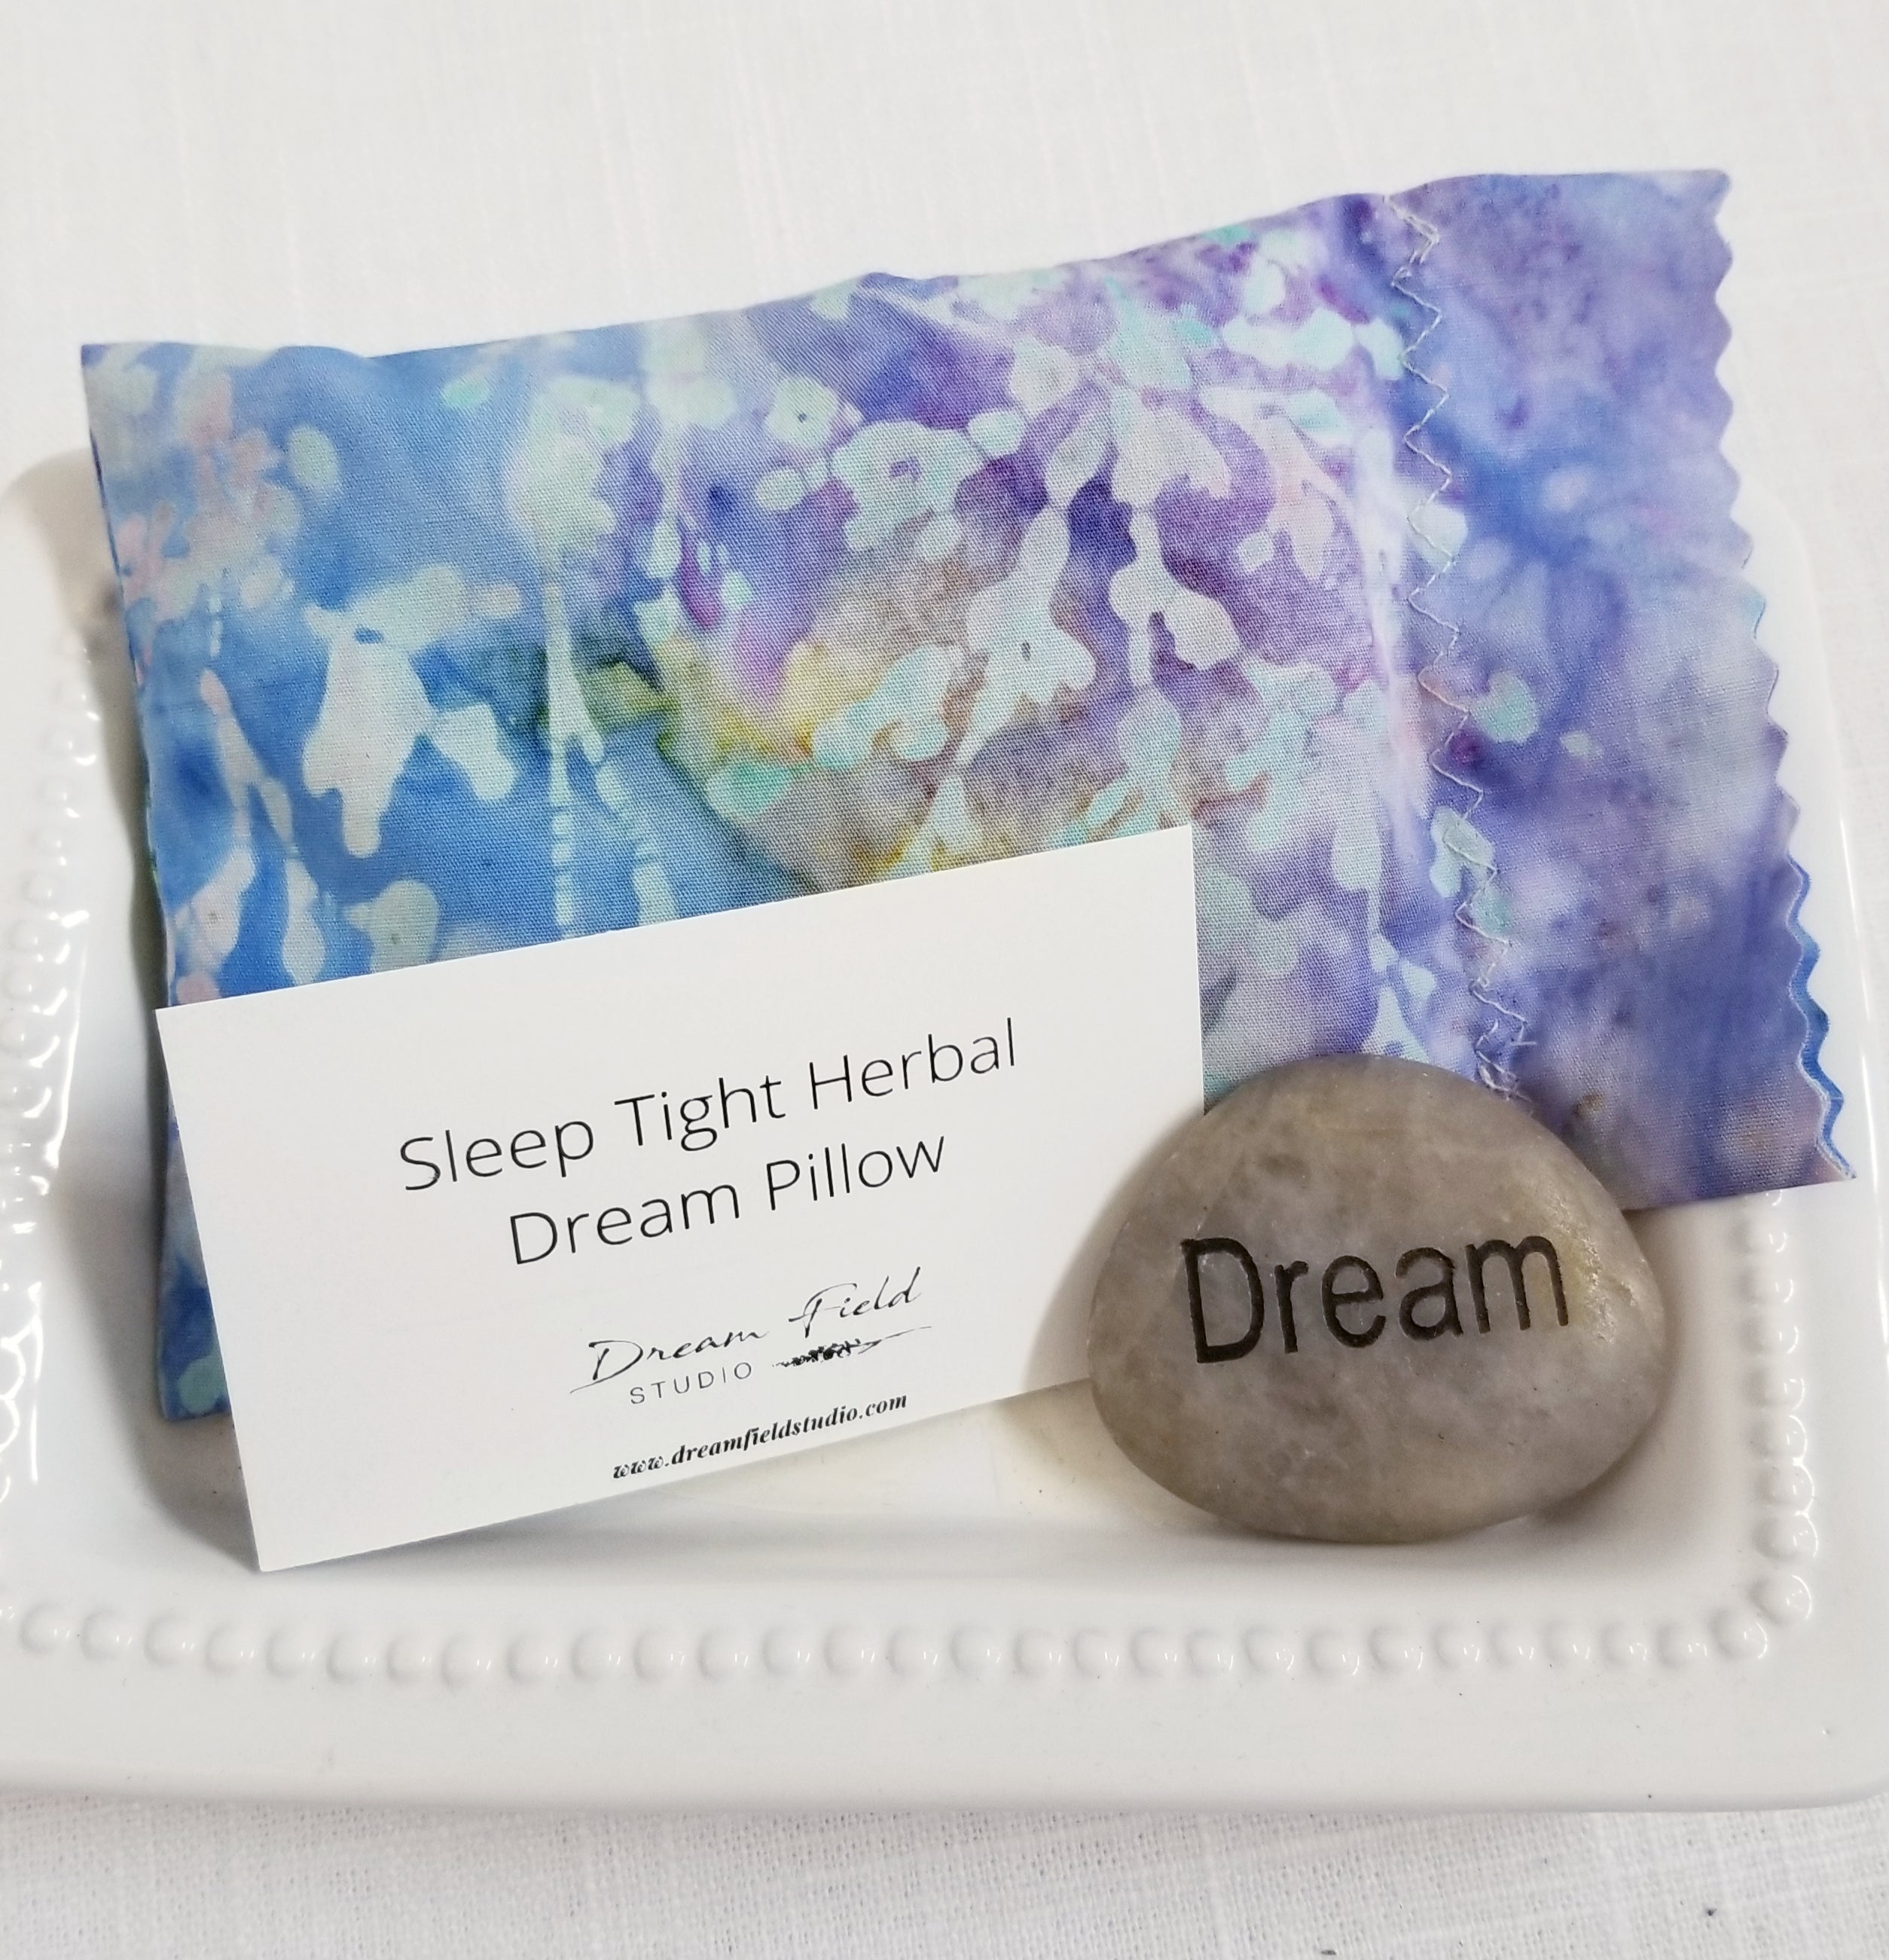 Herbal Sleep Sachet - Petite Dream Pillow for Natural Sleep and Deeper Dreams, 6" x 4", Savory Herbs for Deep Sleep, Pastel Batik